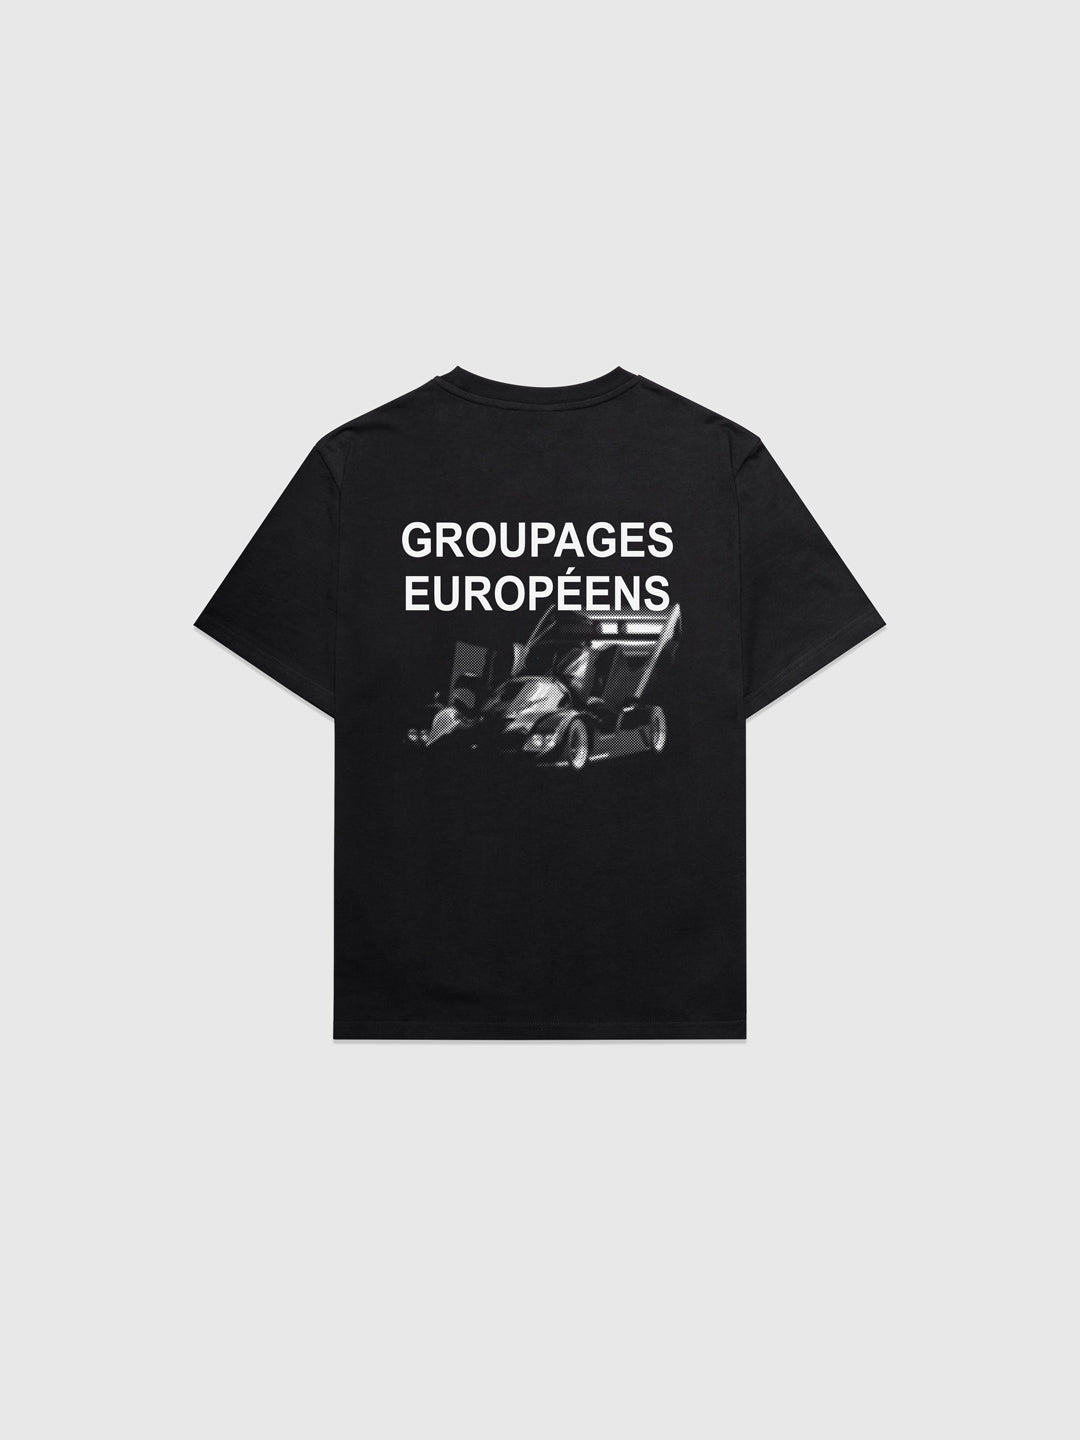 FAT Groupages Européens T-shirt Black